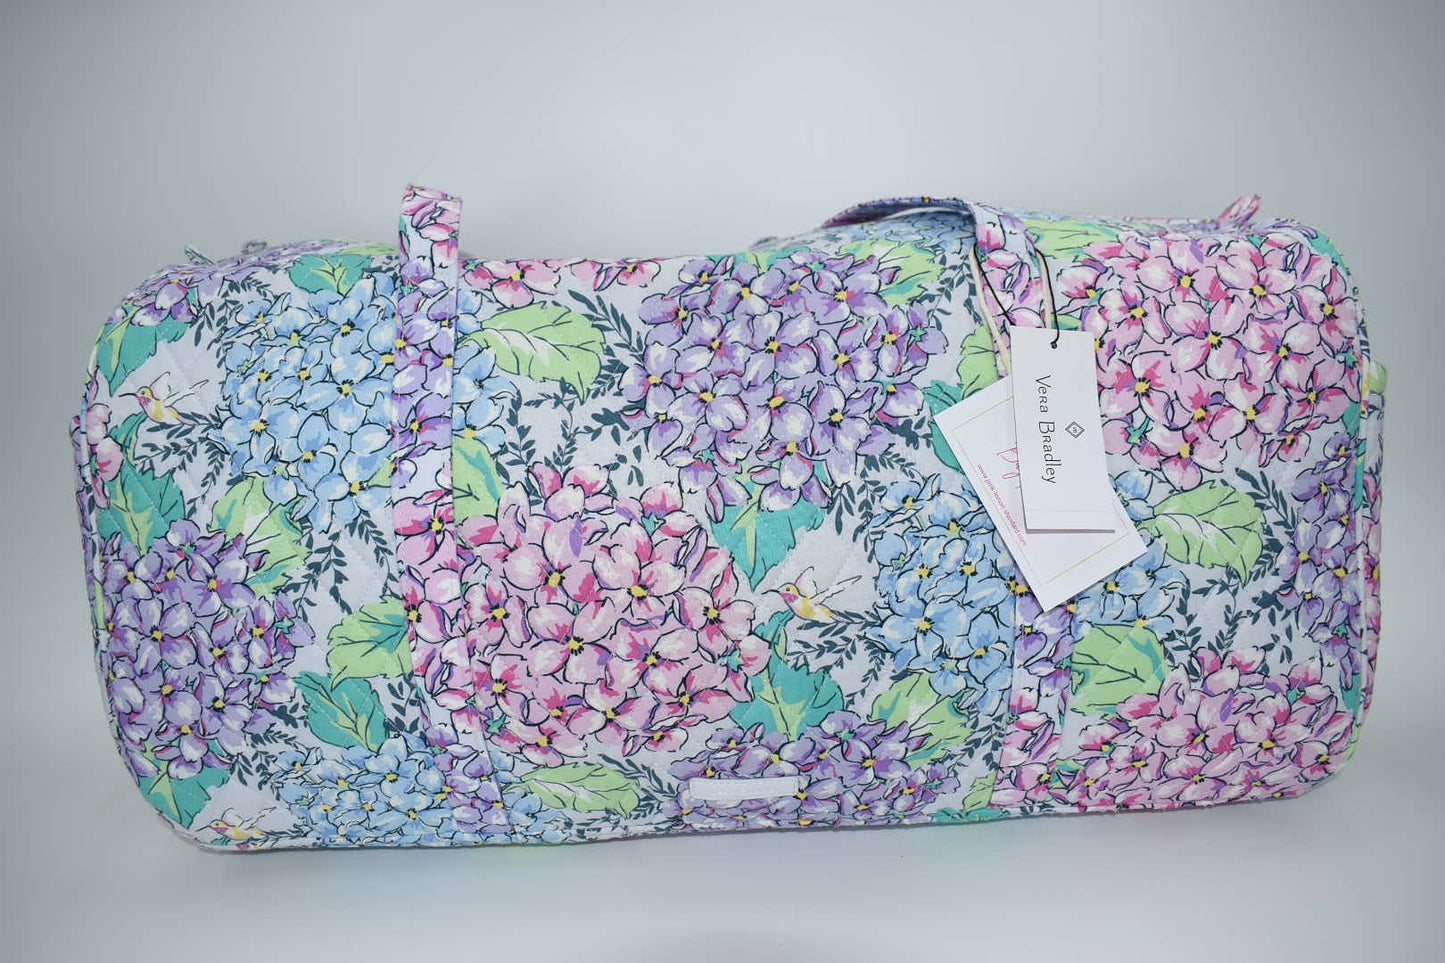 Vera Bradley Large Duffel Bag in Happy Hydrangeas